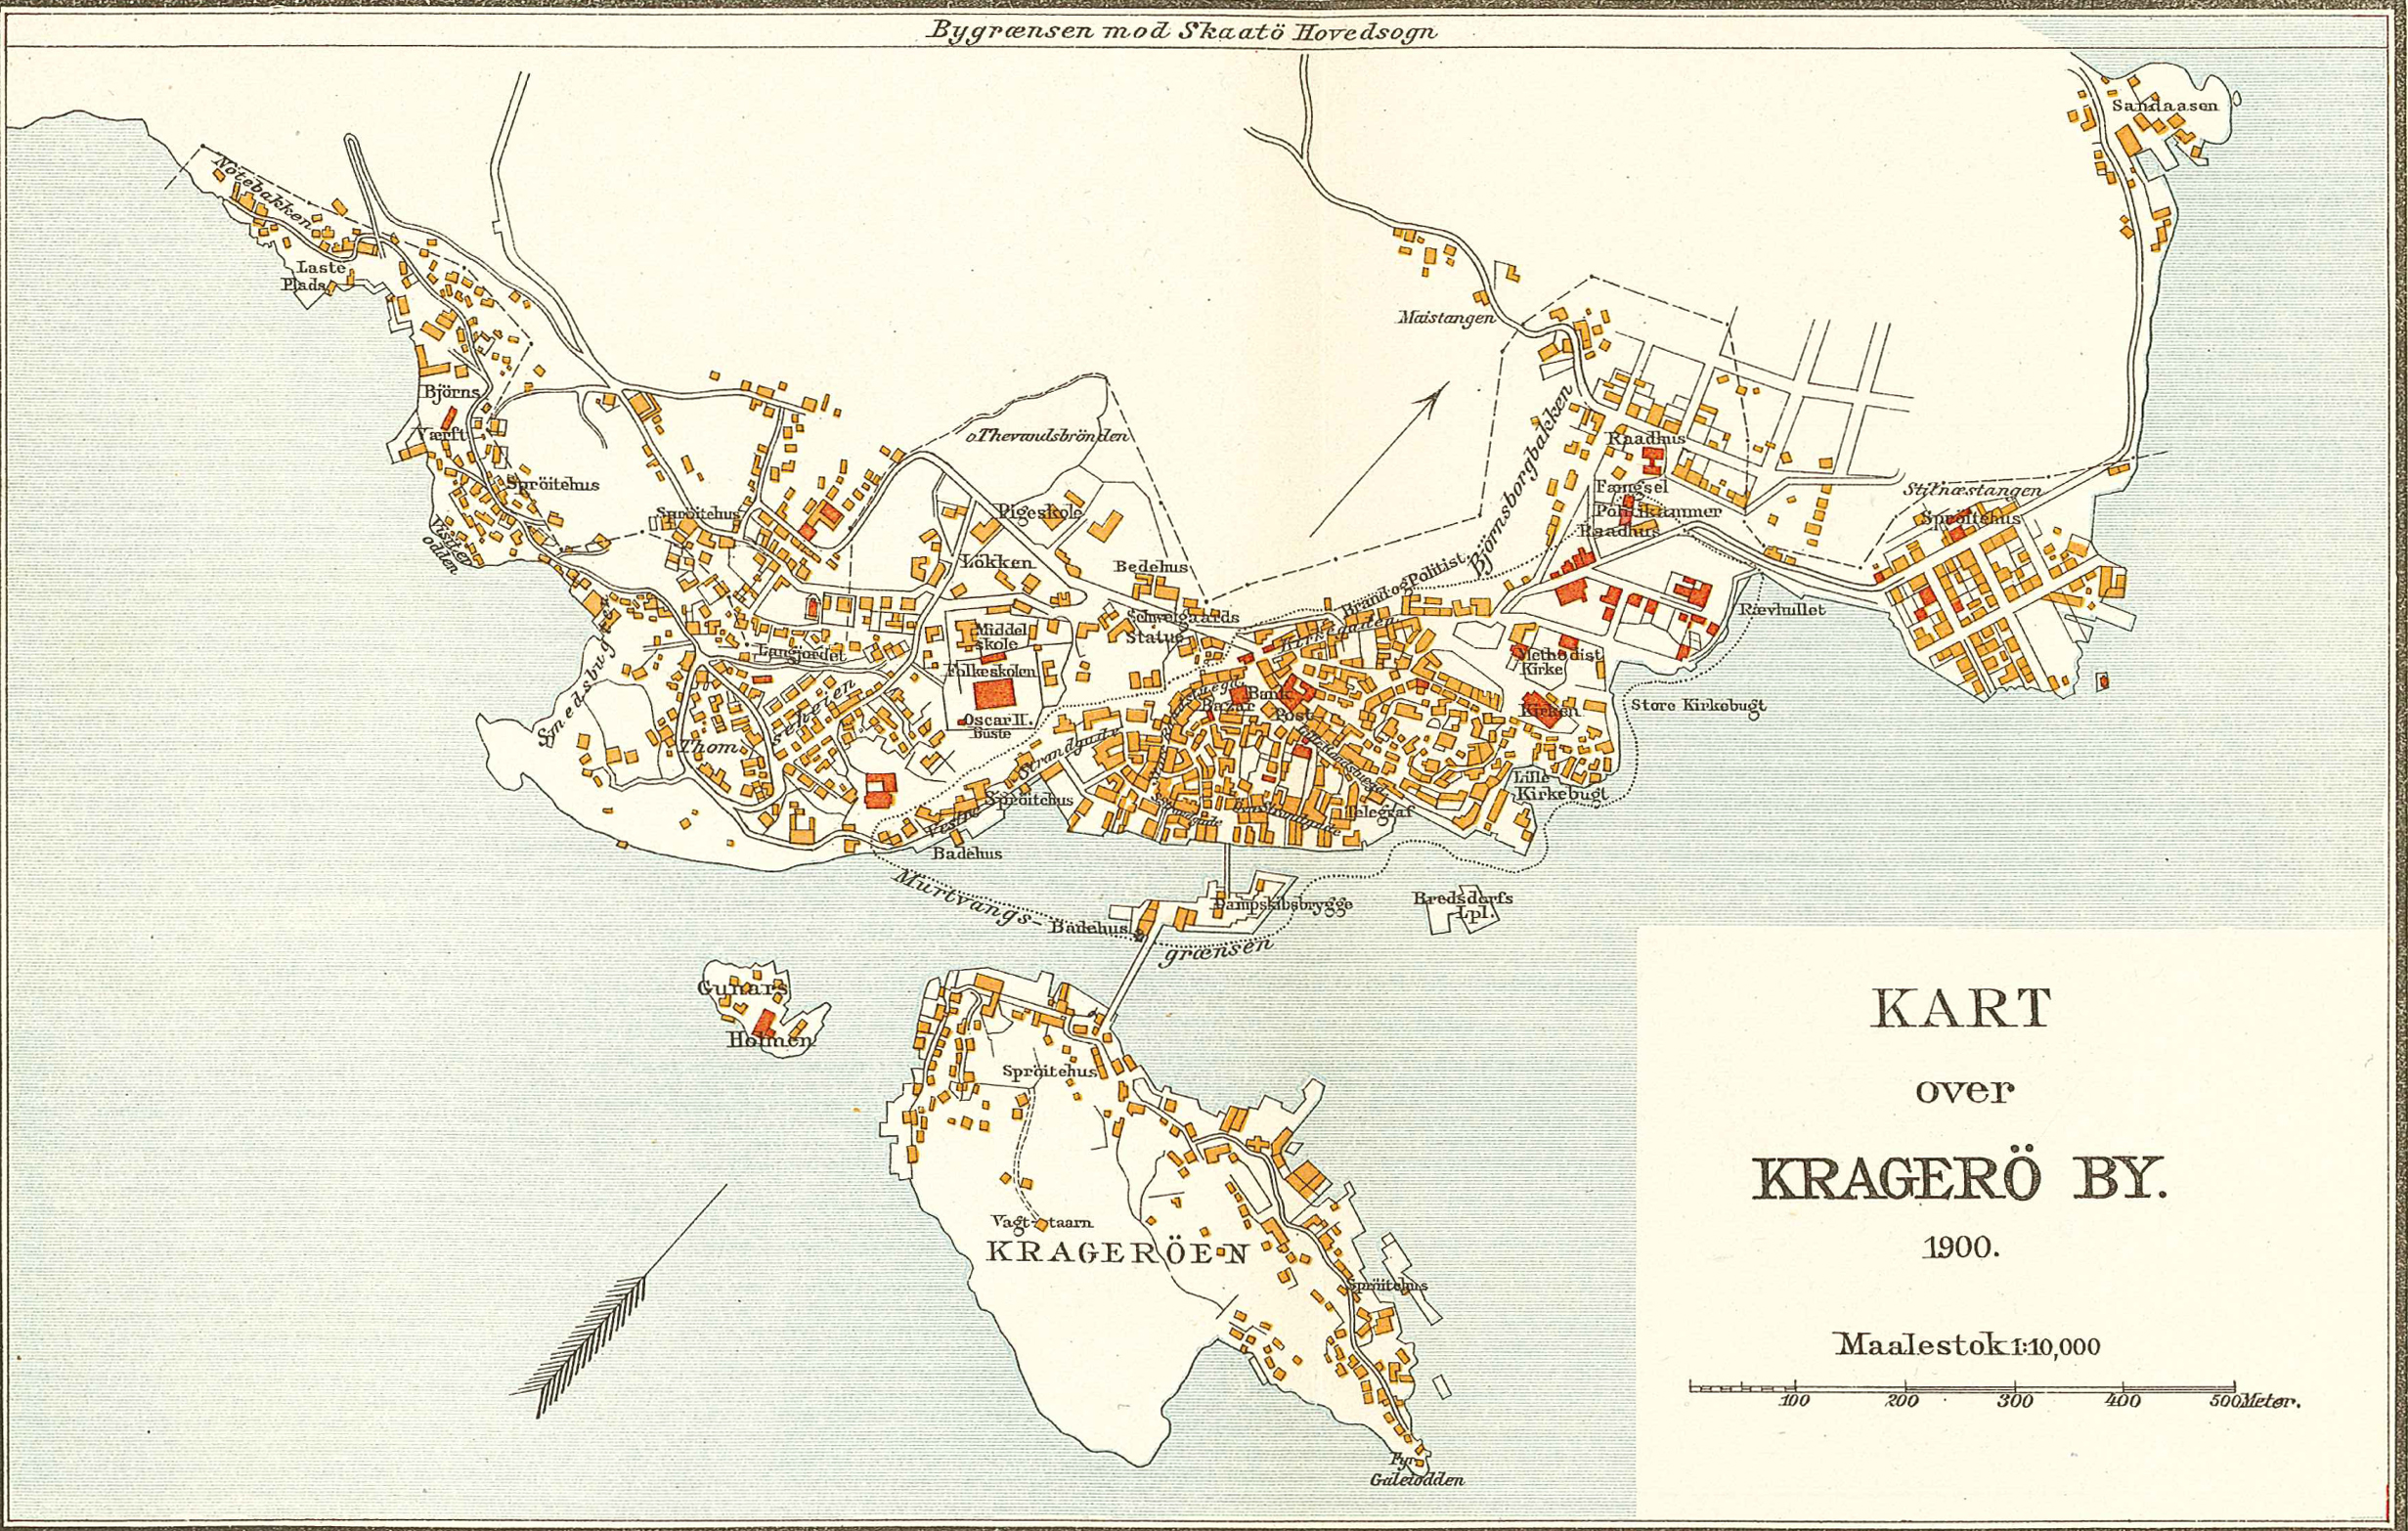 Kragerø map 1900